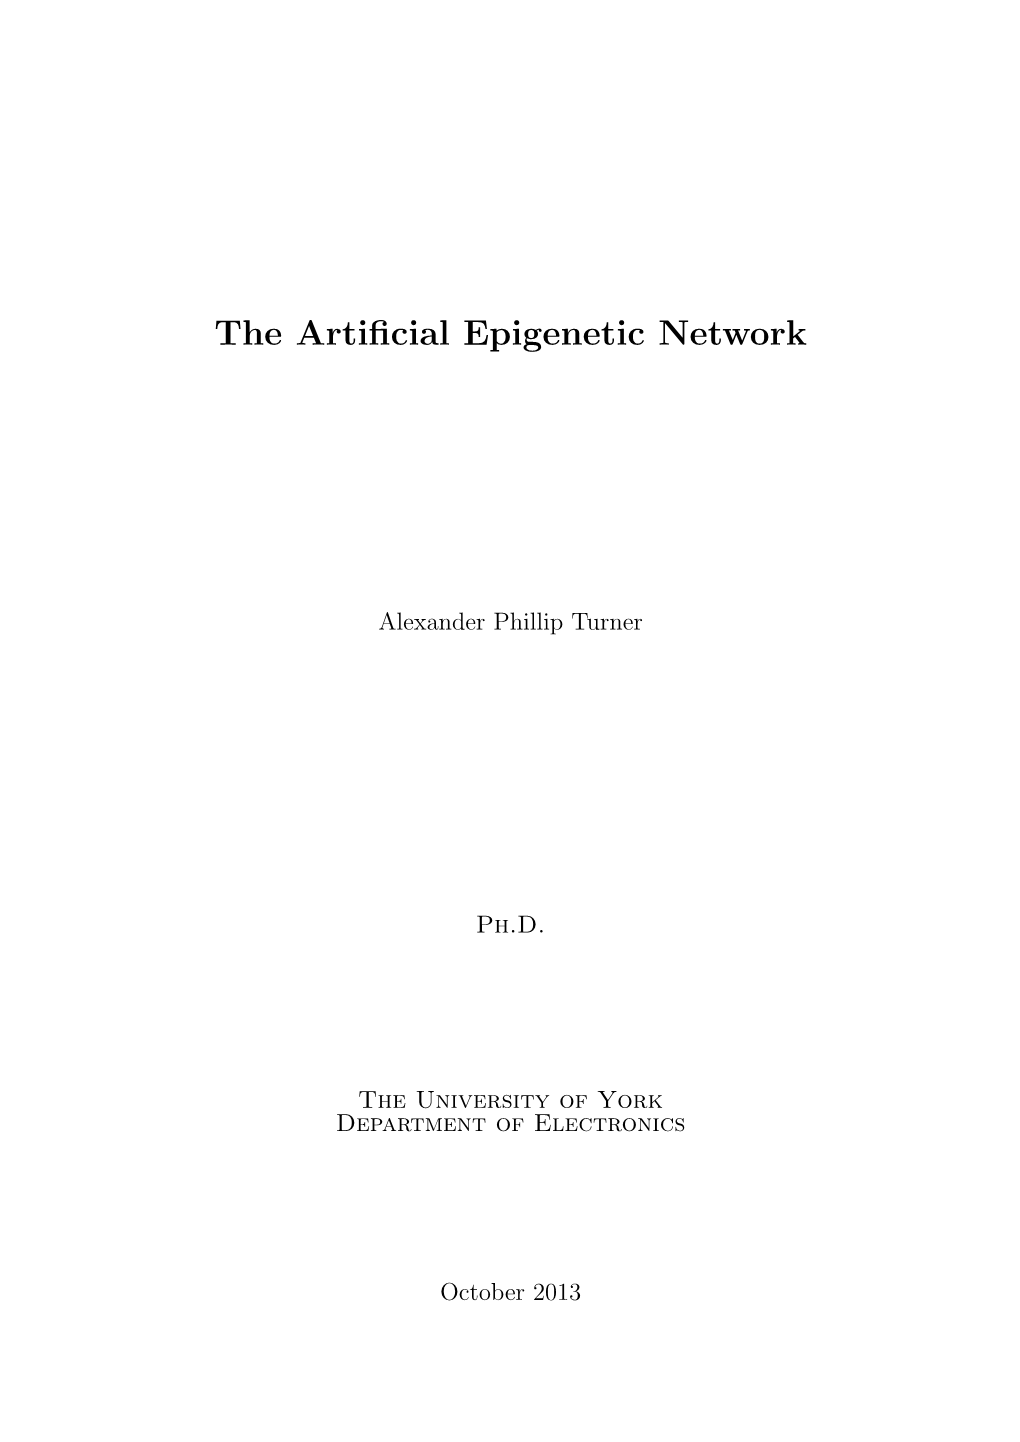 The Artificial Epigenetic Network